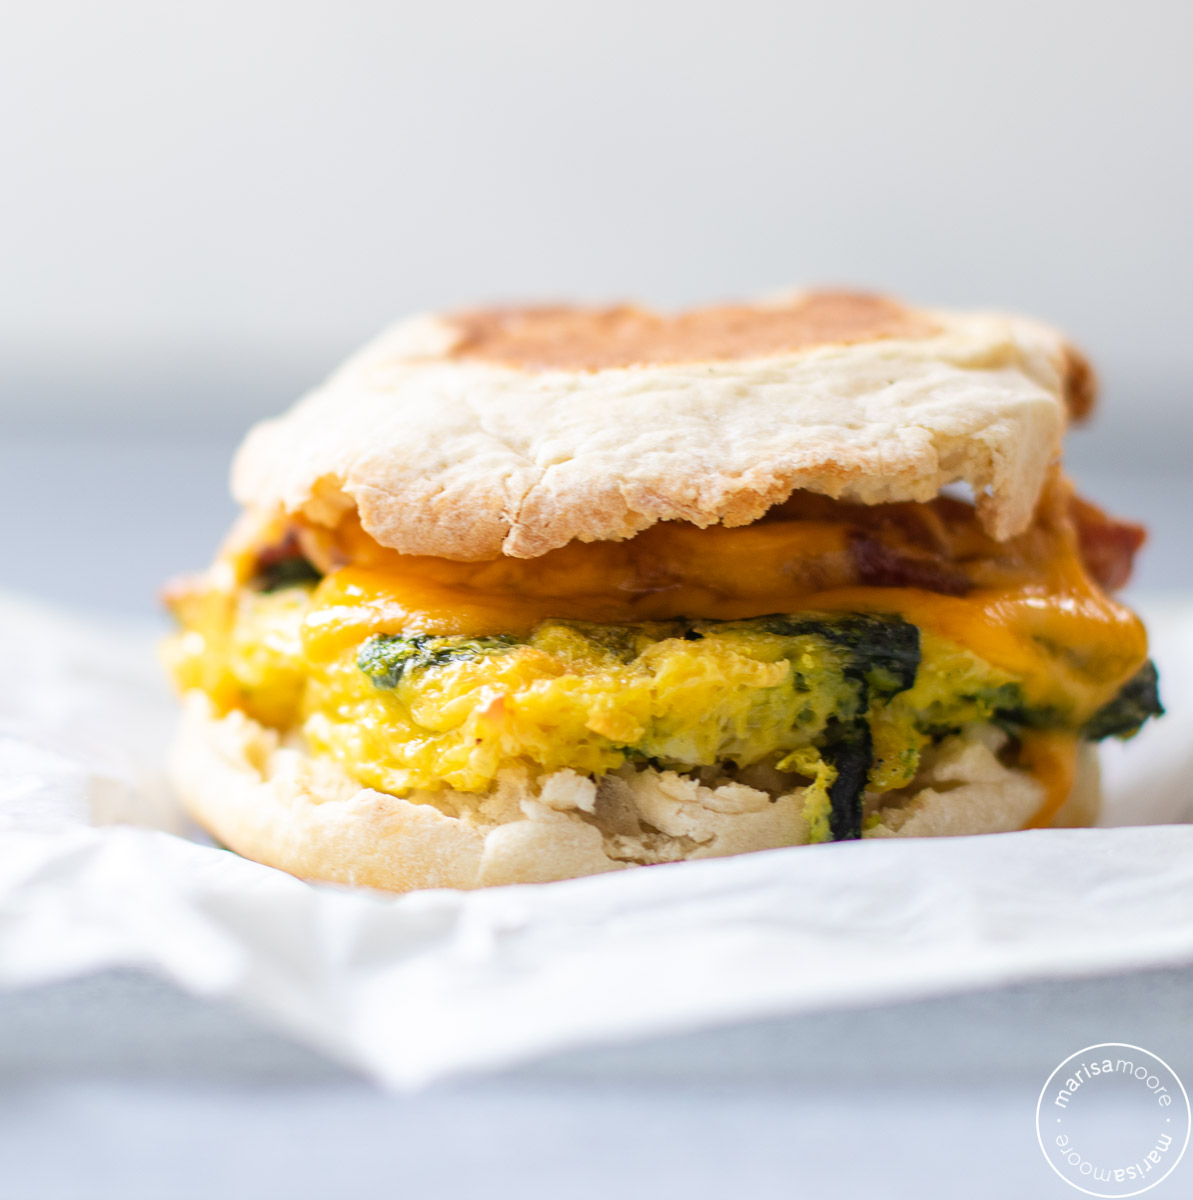 https://marisamoore.com/wp-content/uploads/2020/11/Spinach-Egg-Cheese-Breakfast-Sandwich-Recipe.jpg